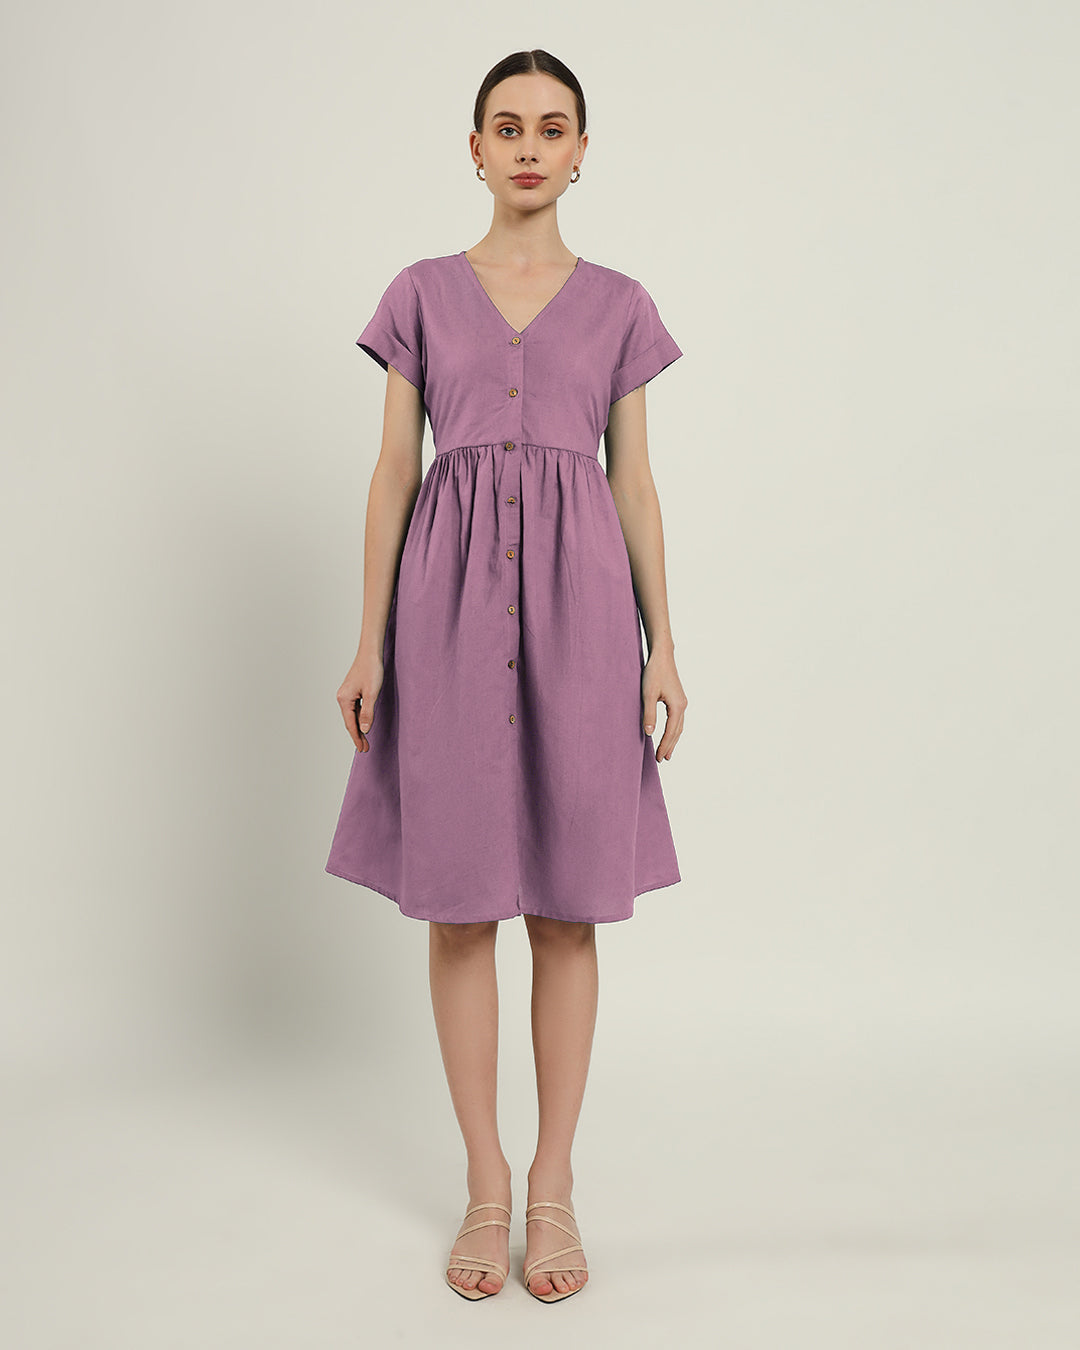 The Valence Purple Swirl Cotton Dress